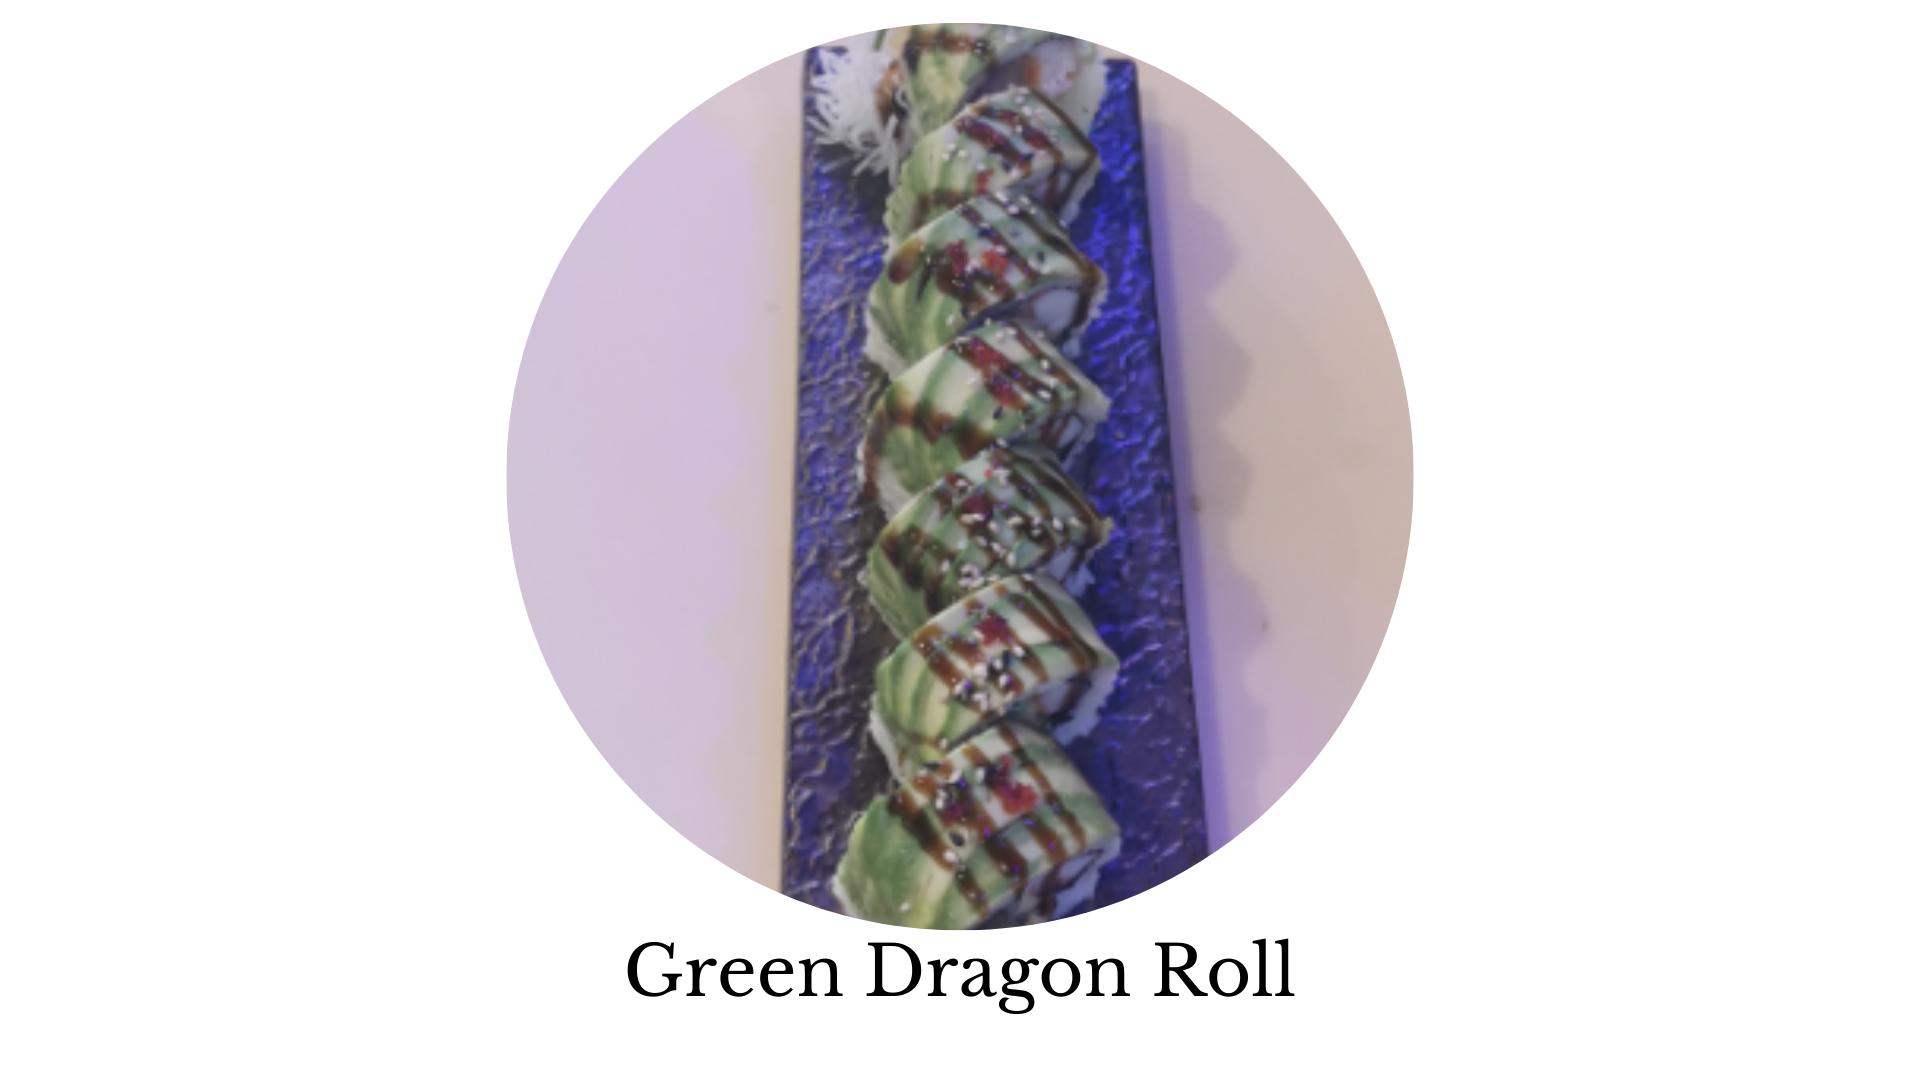 green dragon roll, sushi, sashimi, sushi near me, sushi places near me, best sushi near me, sushi rice